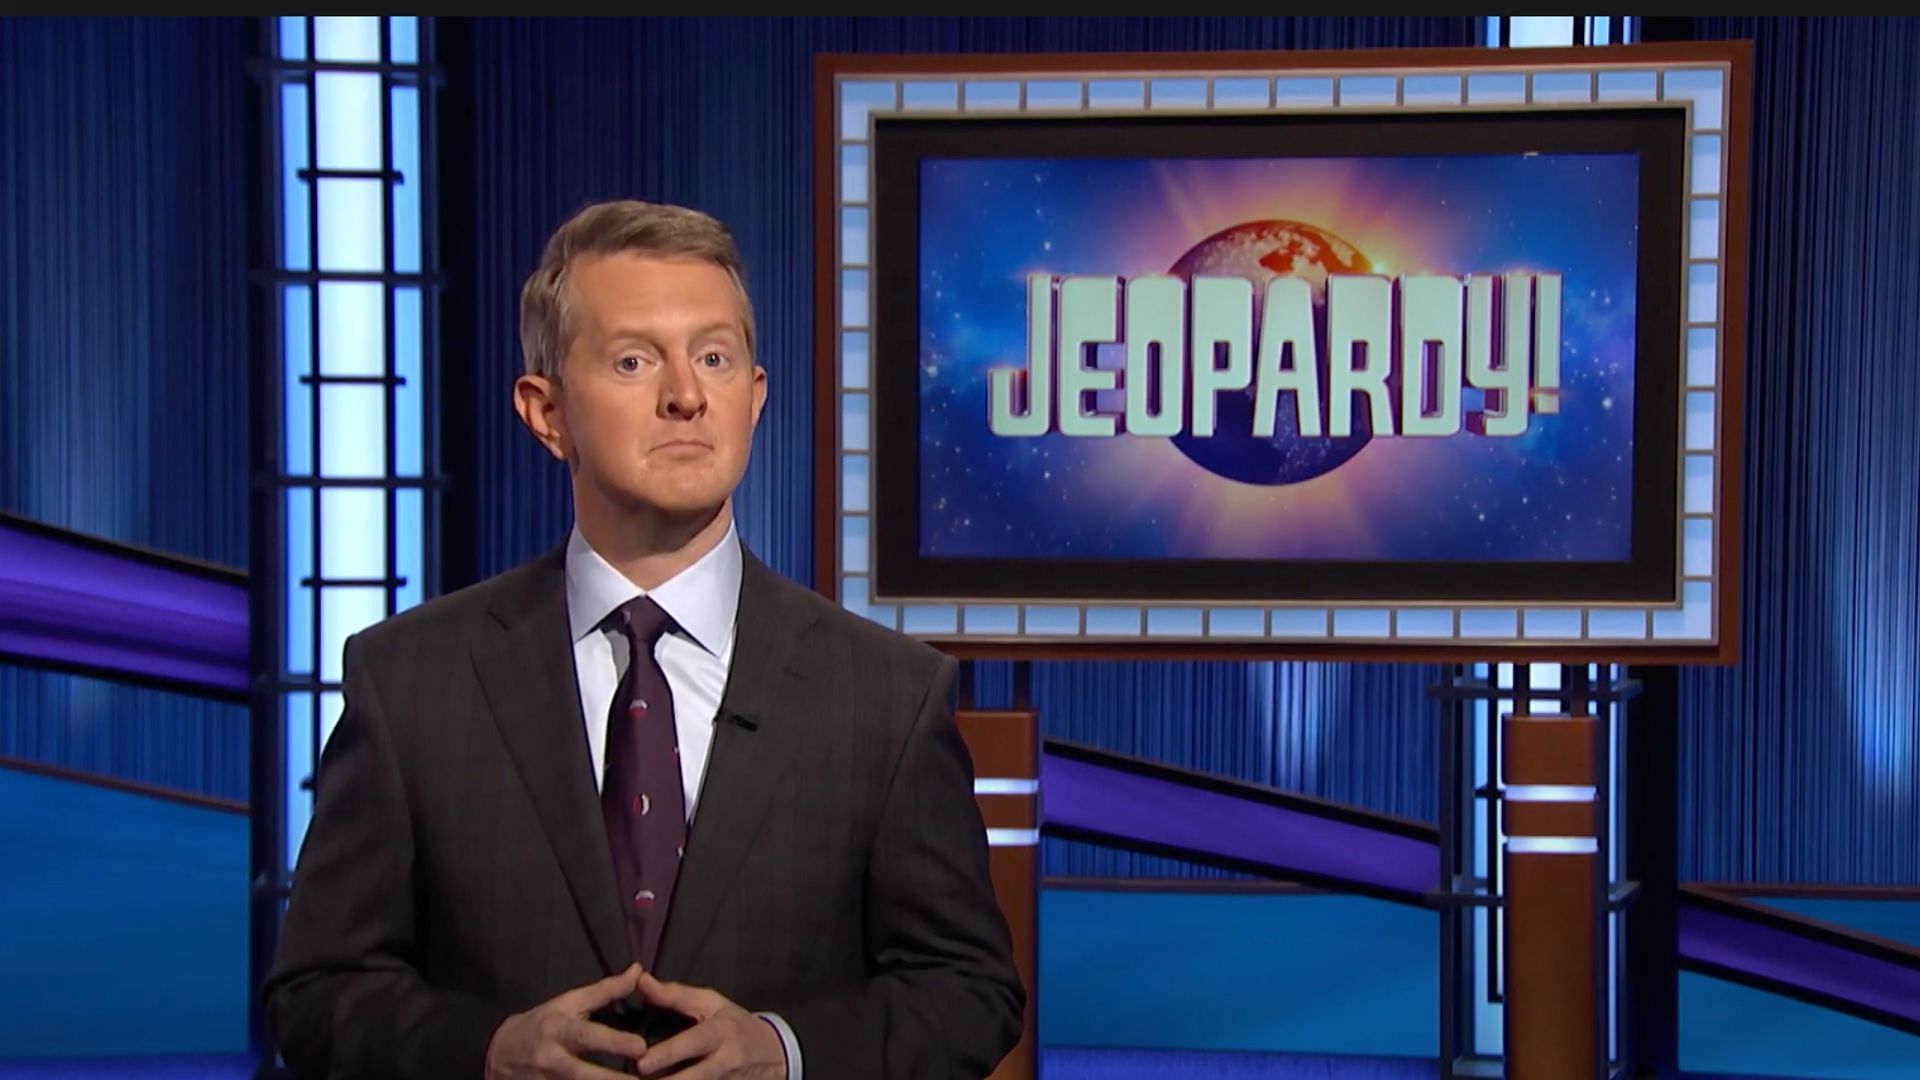 Who won Jeopardy! tonight? September 14, 2022, Wednesday